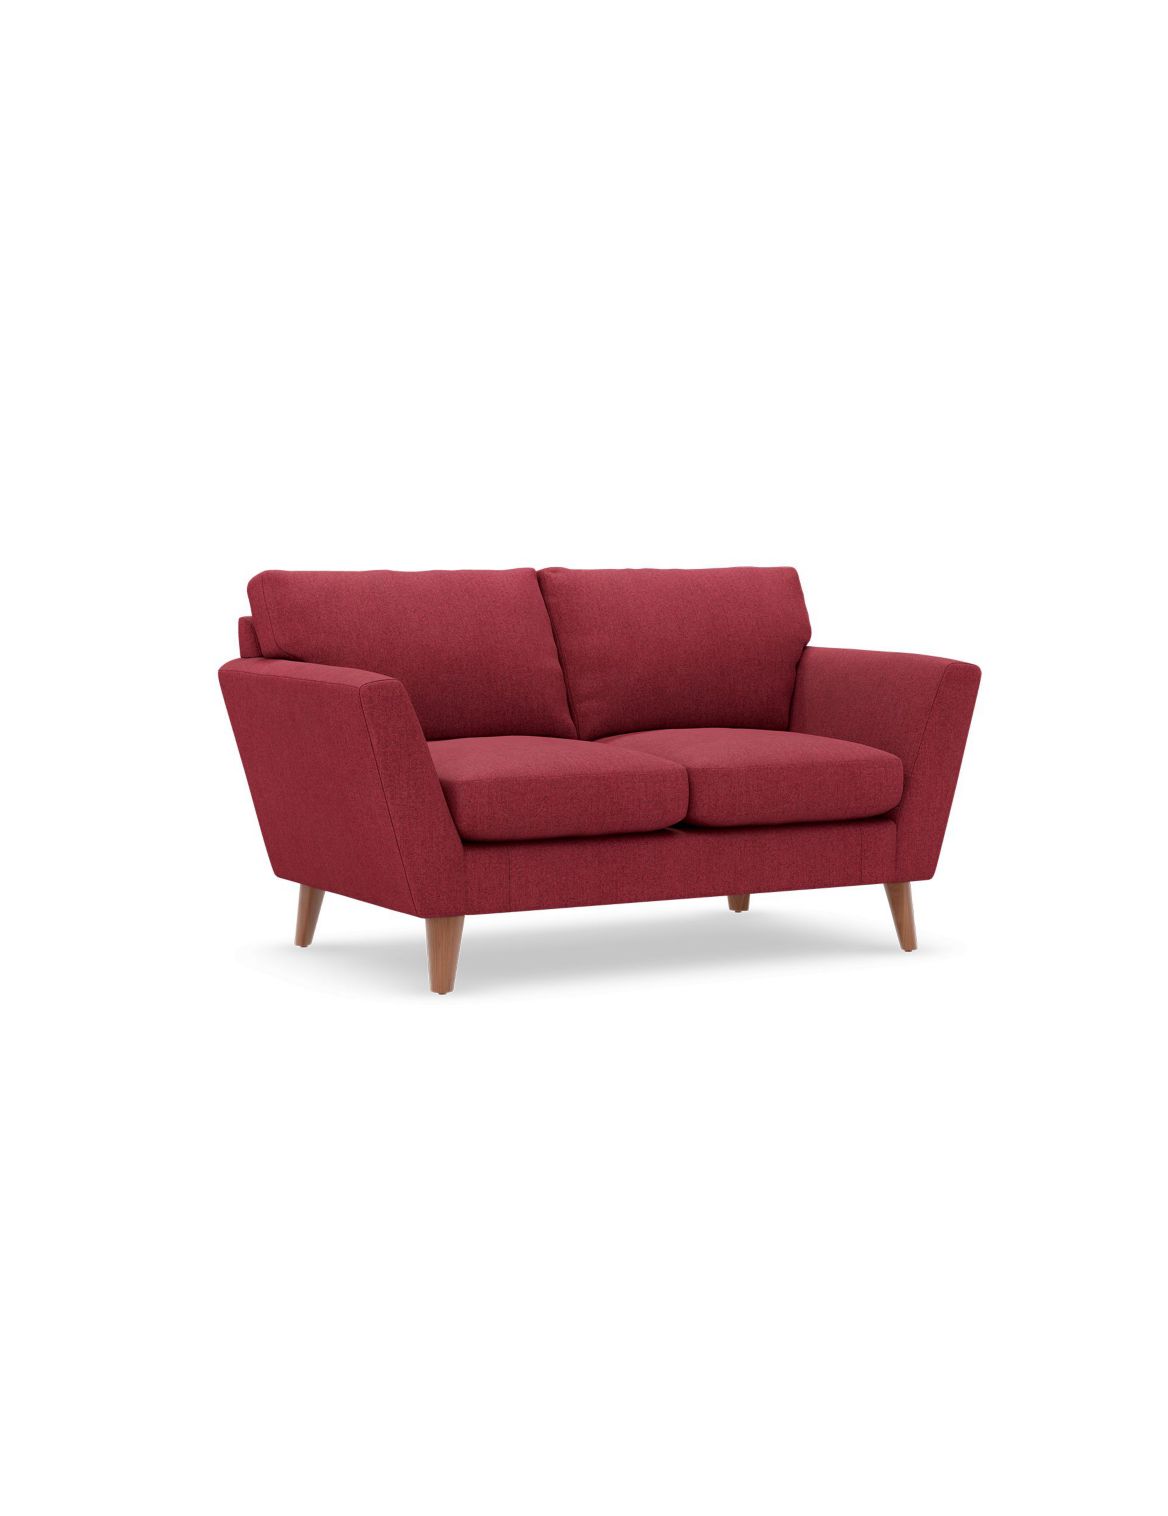 Foxbury Small Sofa red